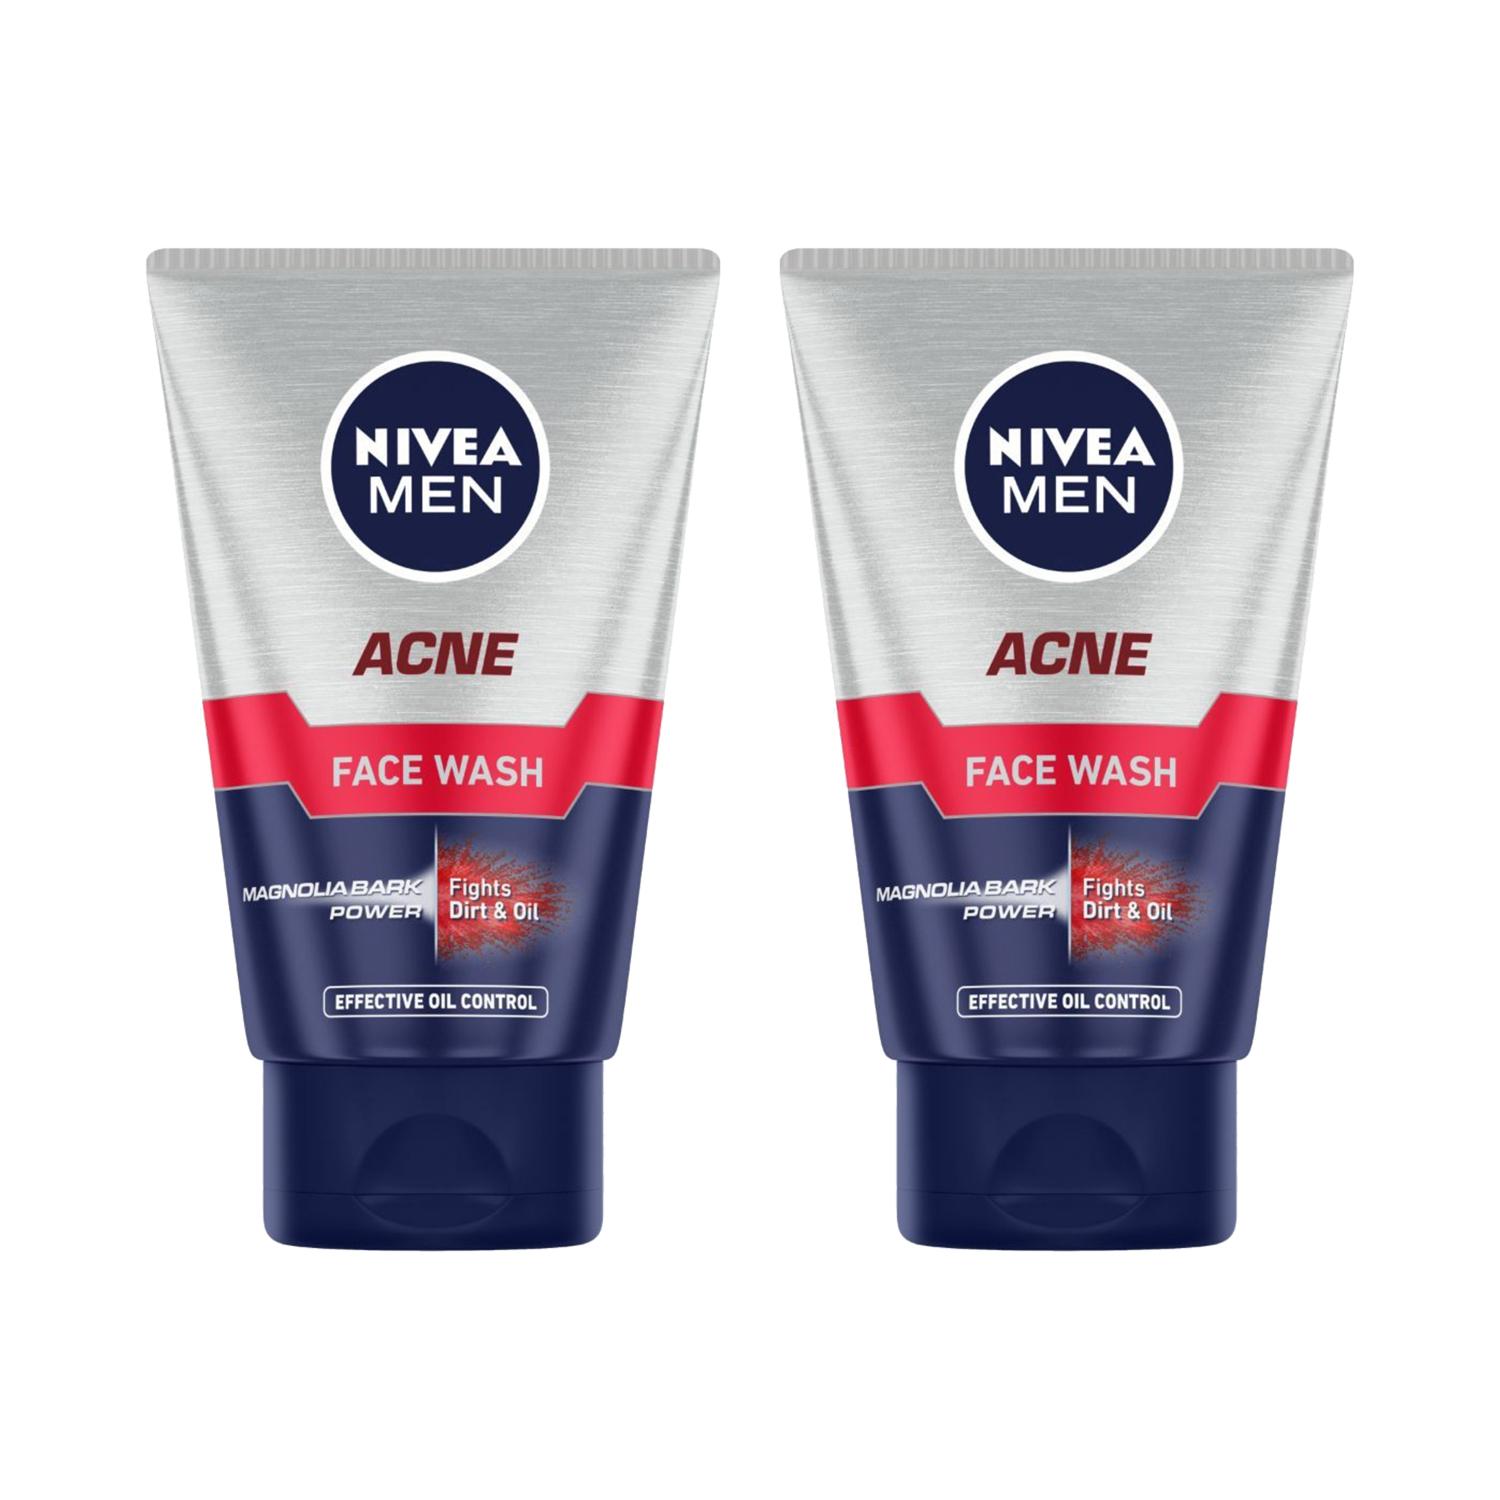 Nivea Men Cleansing Acne Facewash Large (100 g) (Pack Of 2) Combo